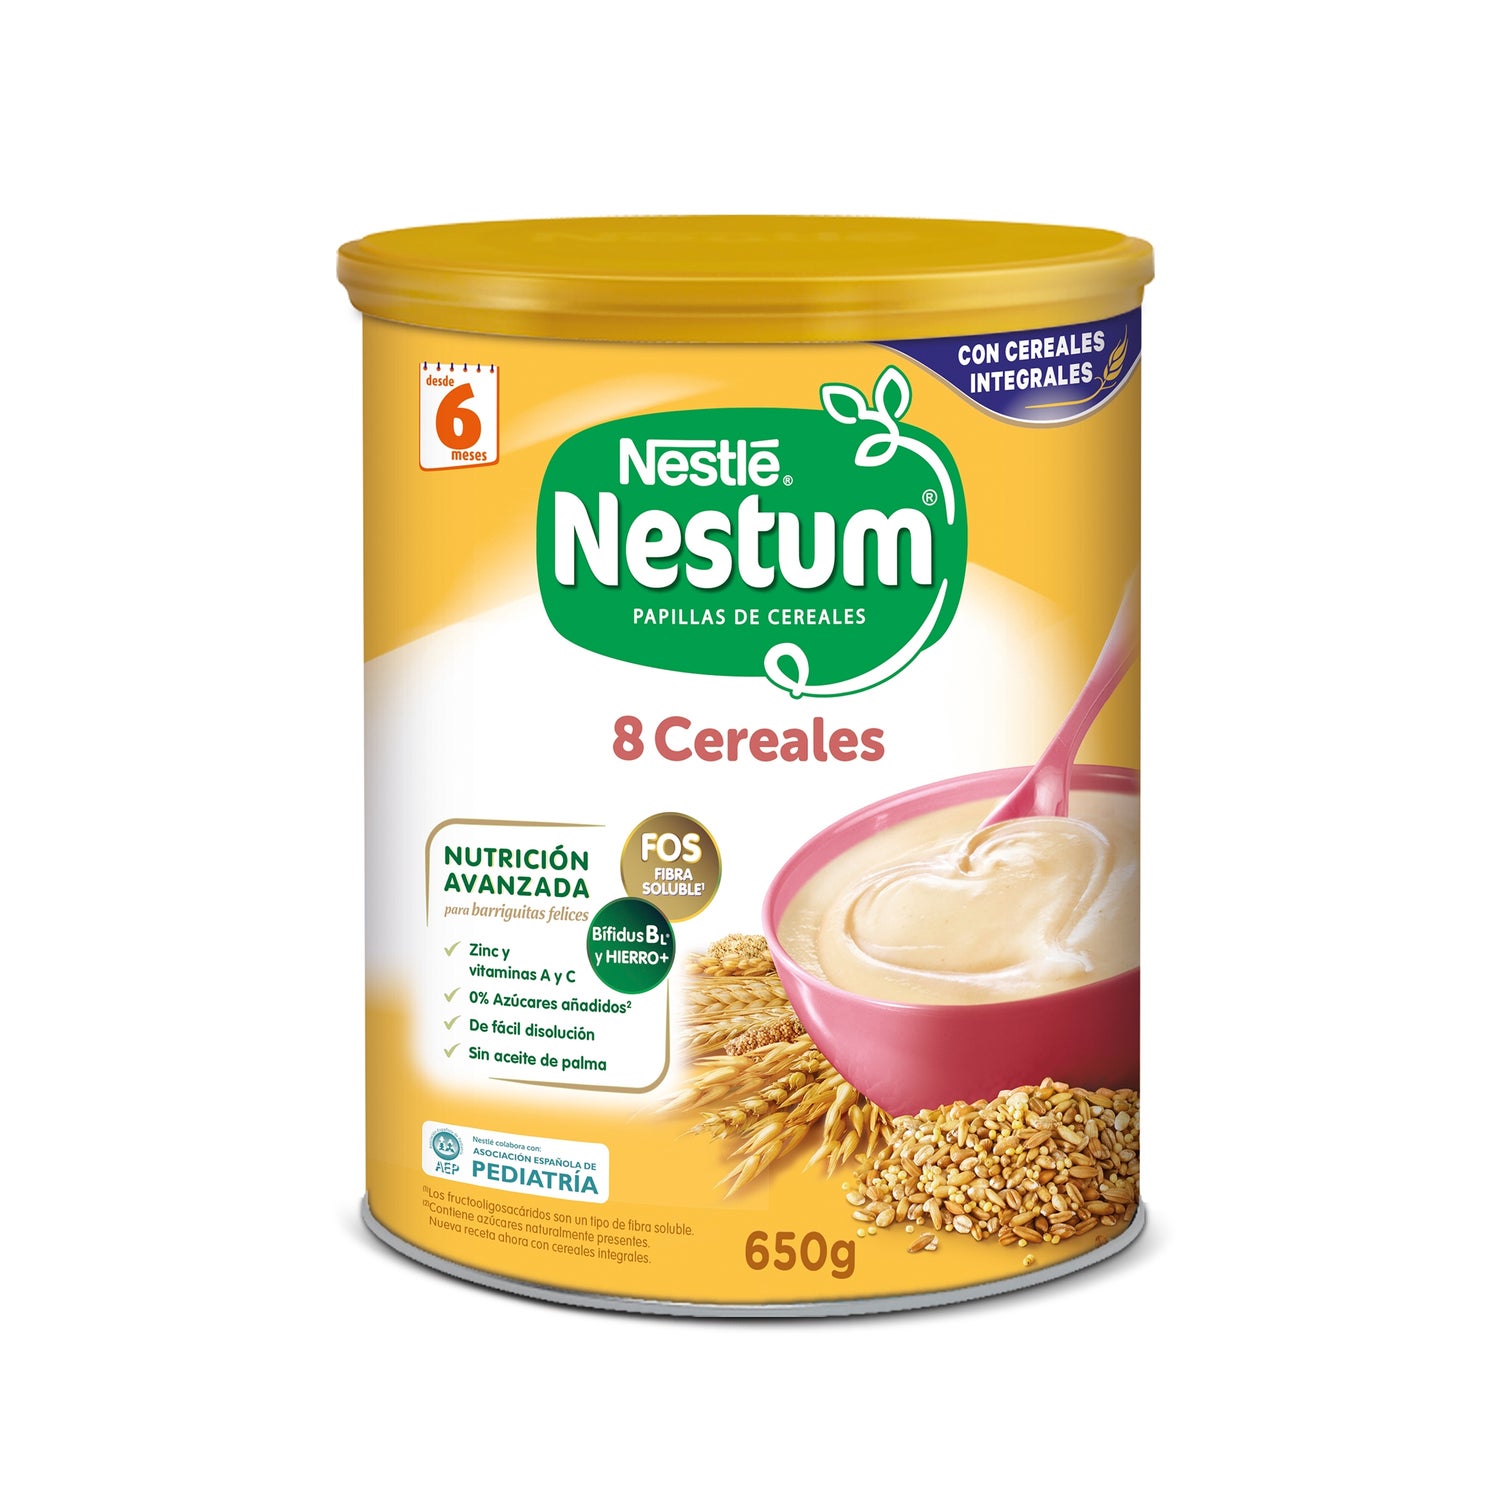 Nestle NAN Optipro 2 double 2x800gr